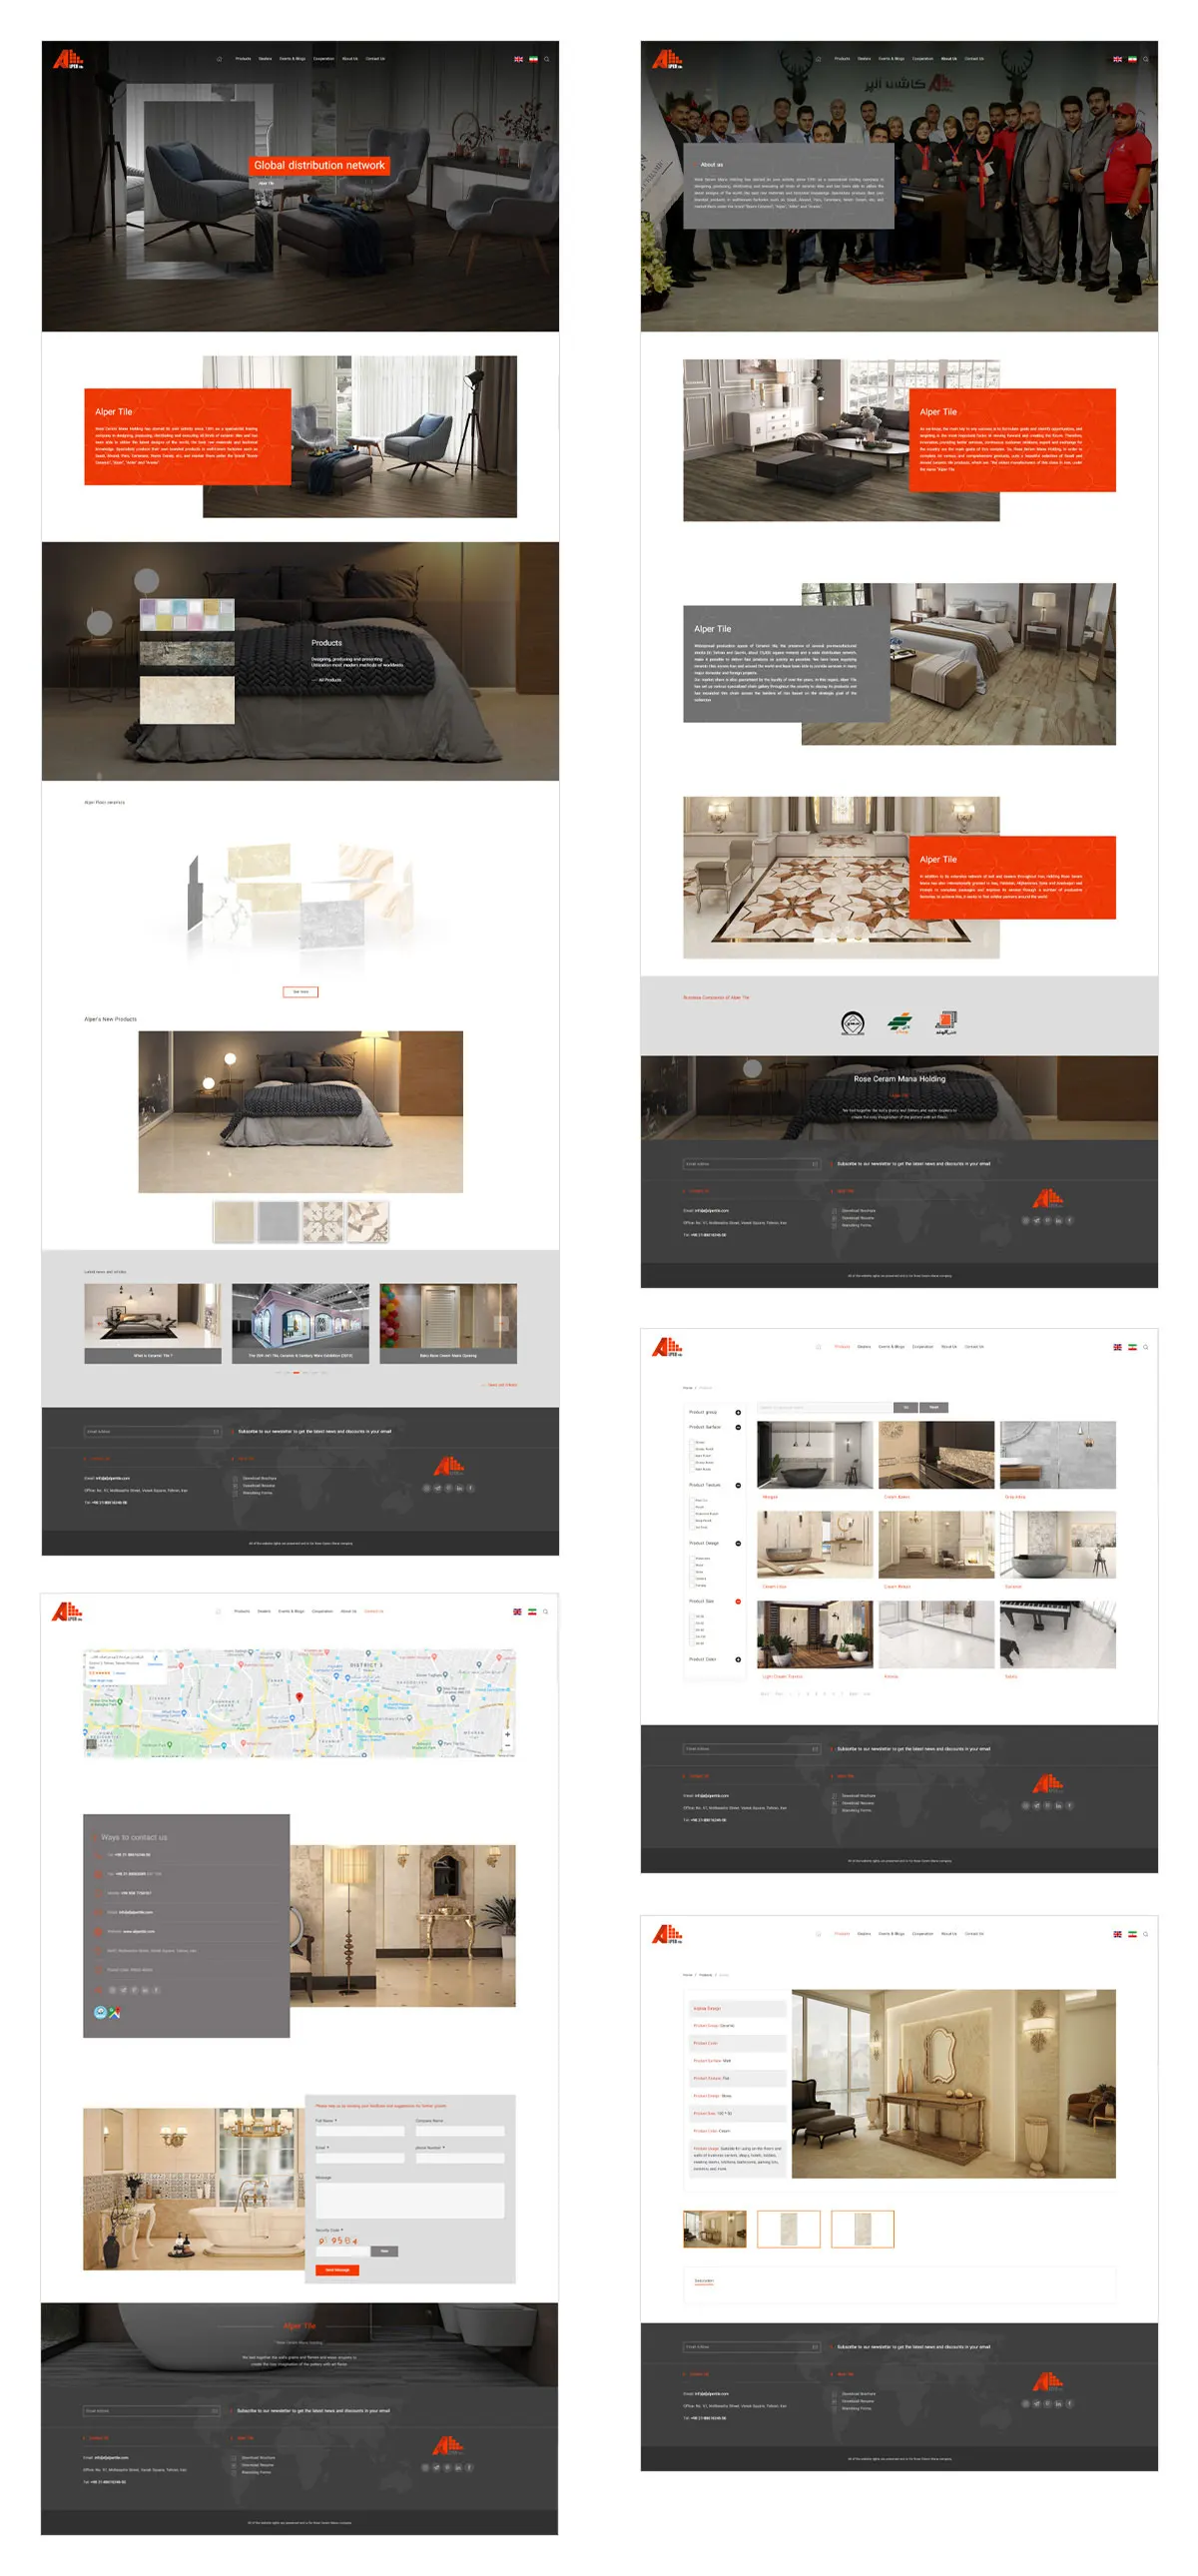 Alper Tile Company website development | Hossein Donyadideh